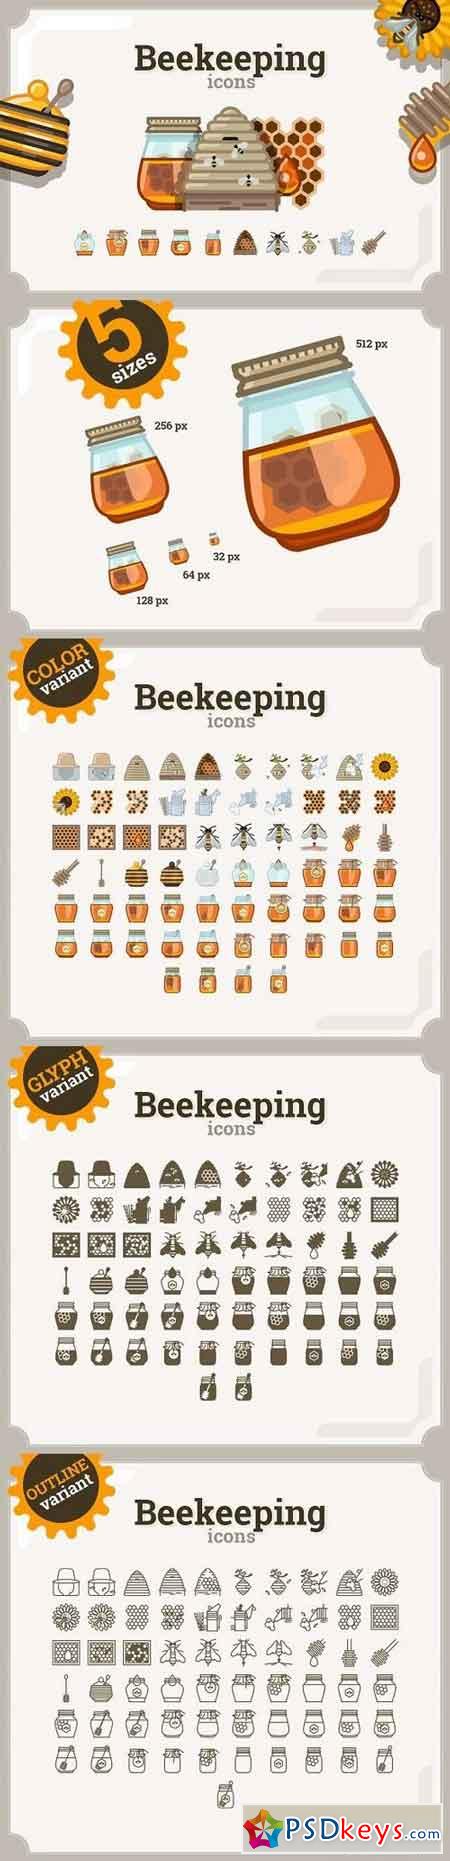 Beekeeping icons set (3 variants) 1326278